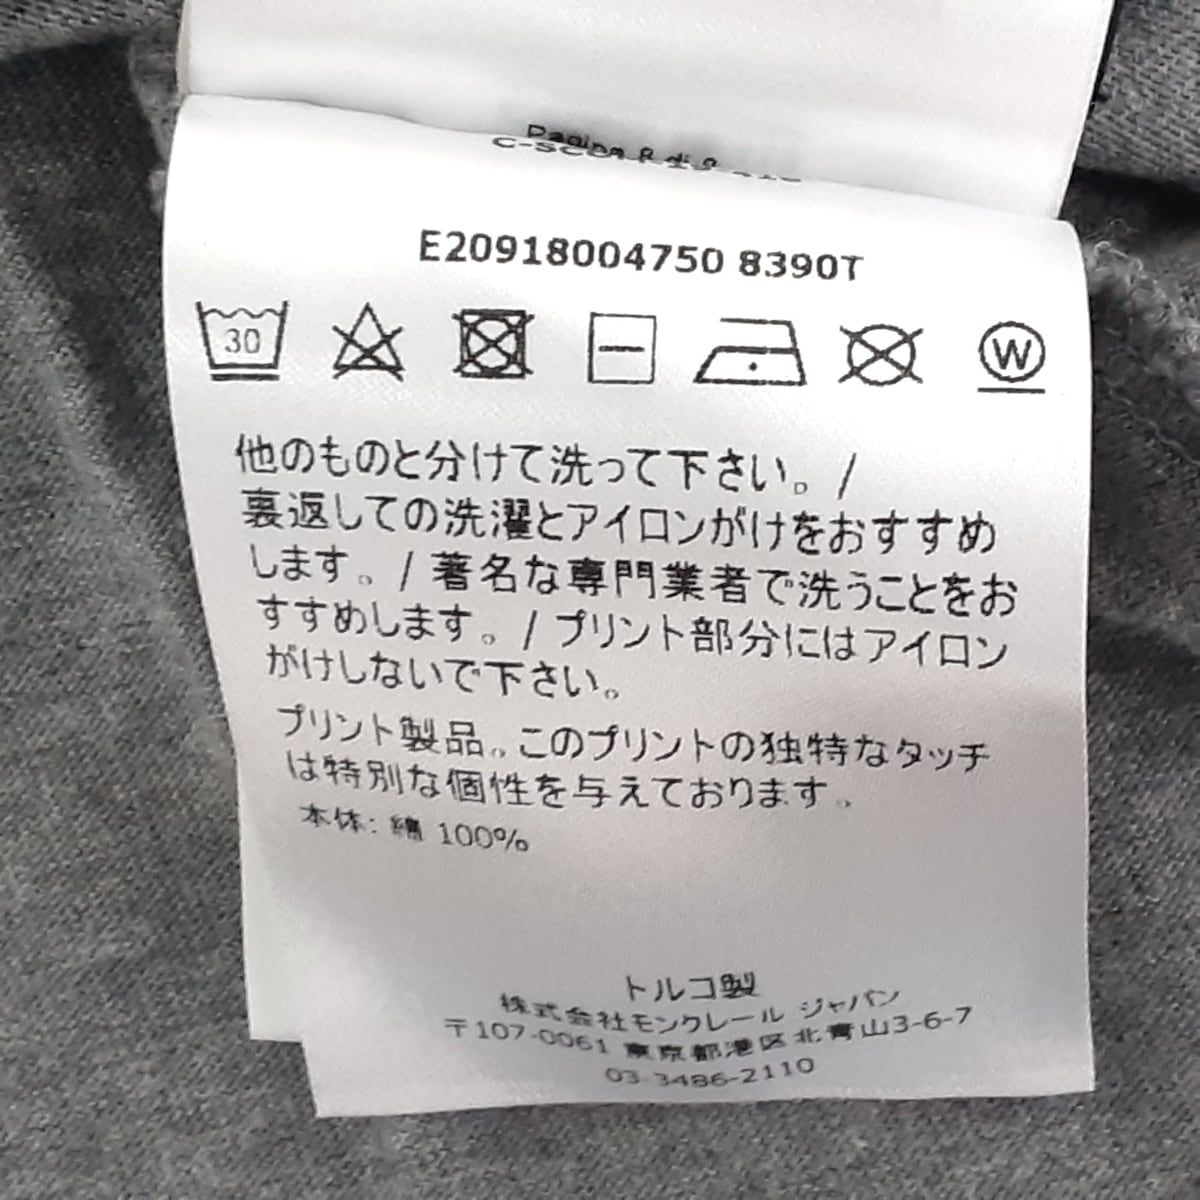 MONCLER(モンクレール) 半袖Tシャツ サイズ2 M メンズ美品 - グレー×ネイビー×マルチ クルーネック - メルカリ